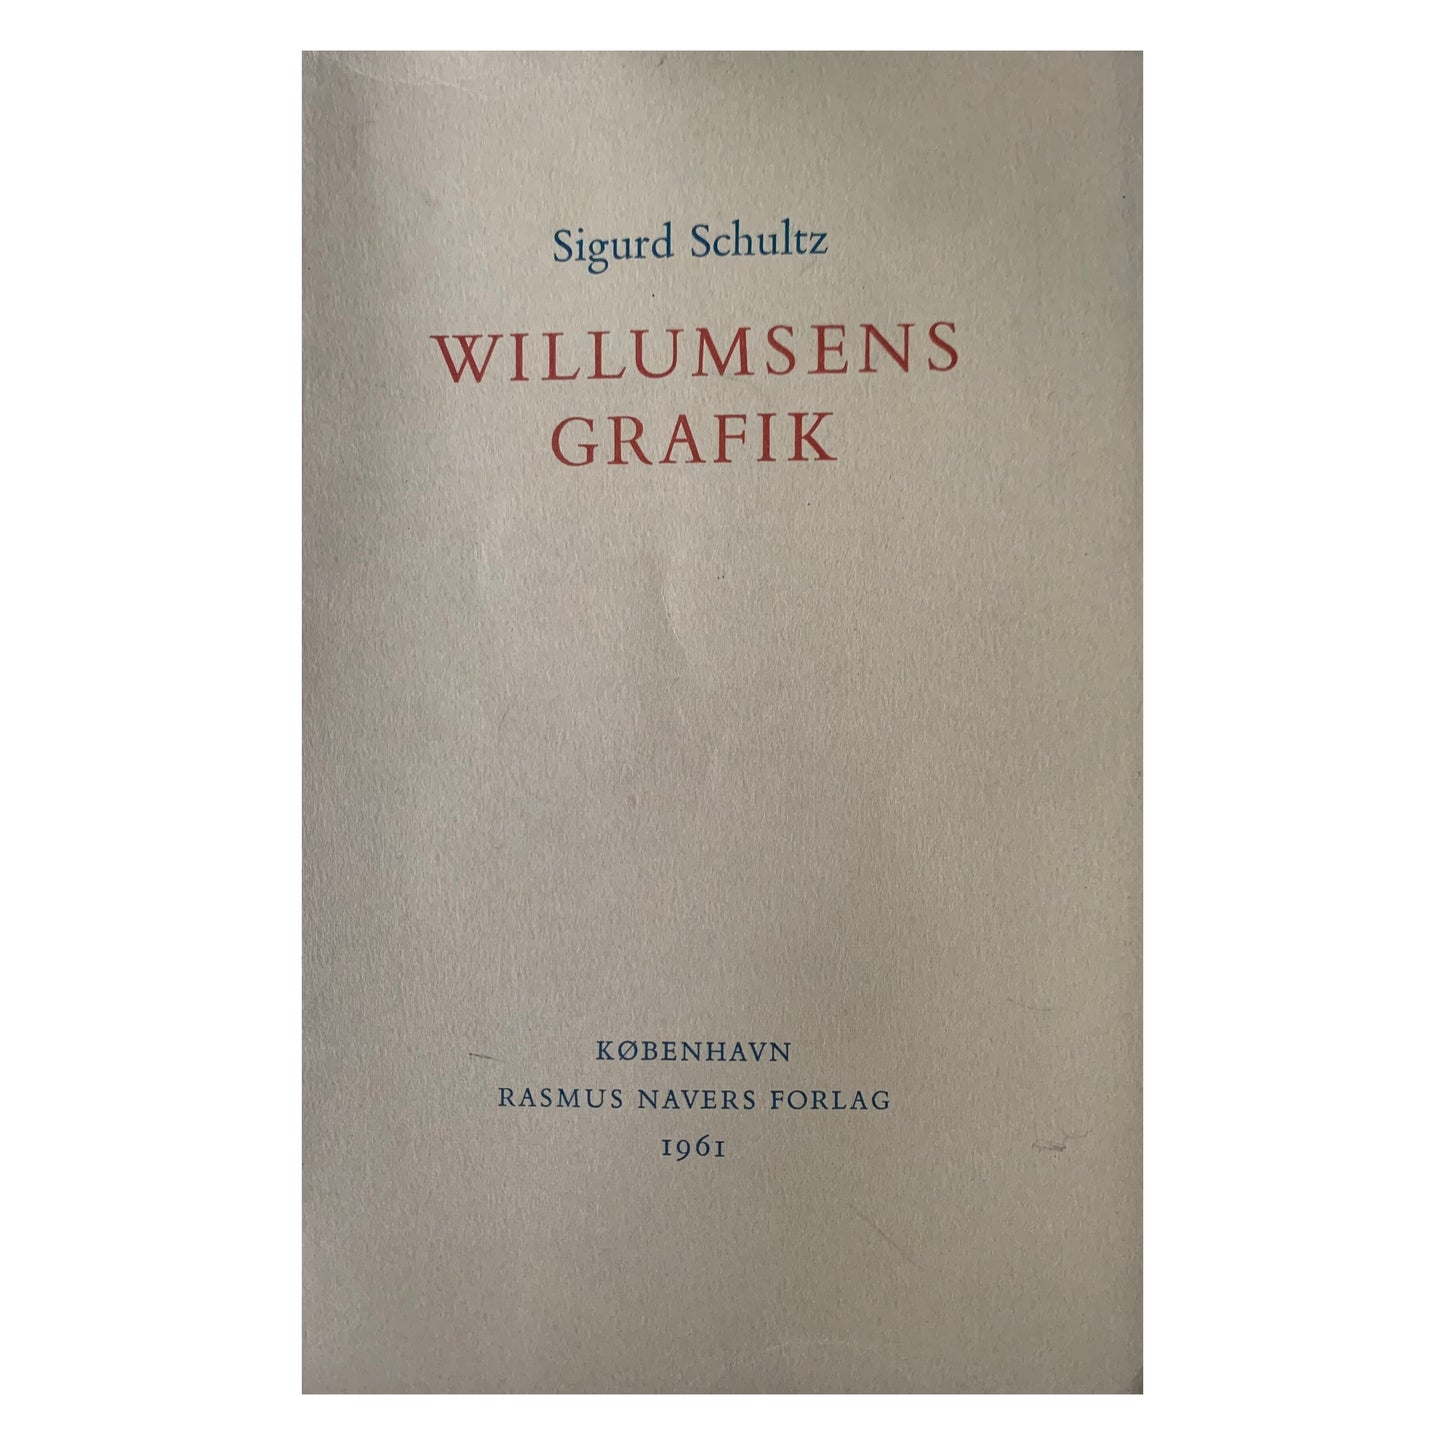 Sigurd Schultz. “Willumsens Grafik”, 1961